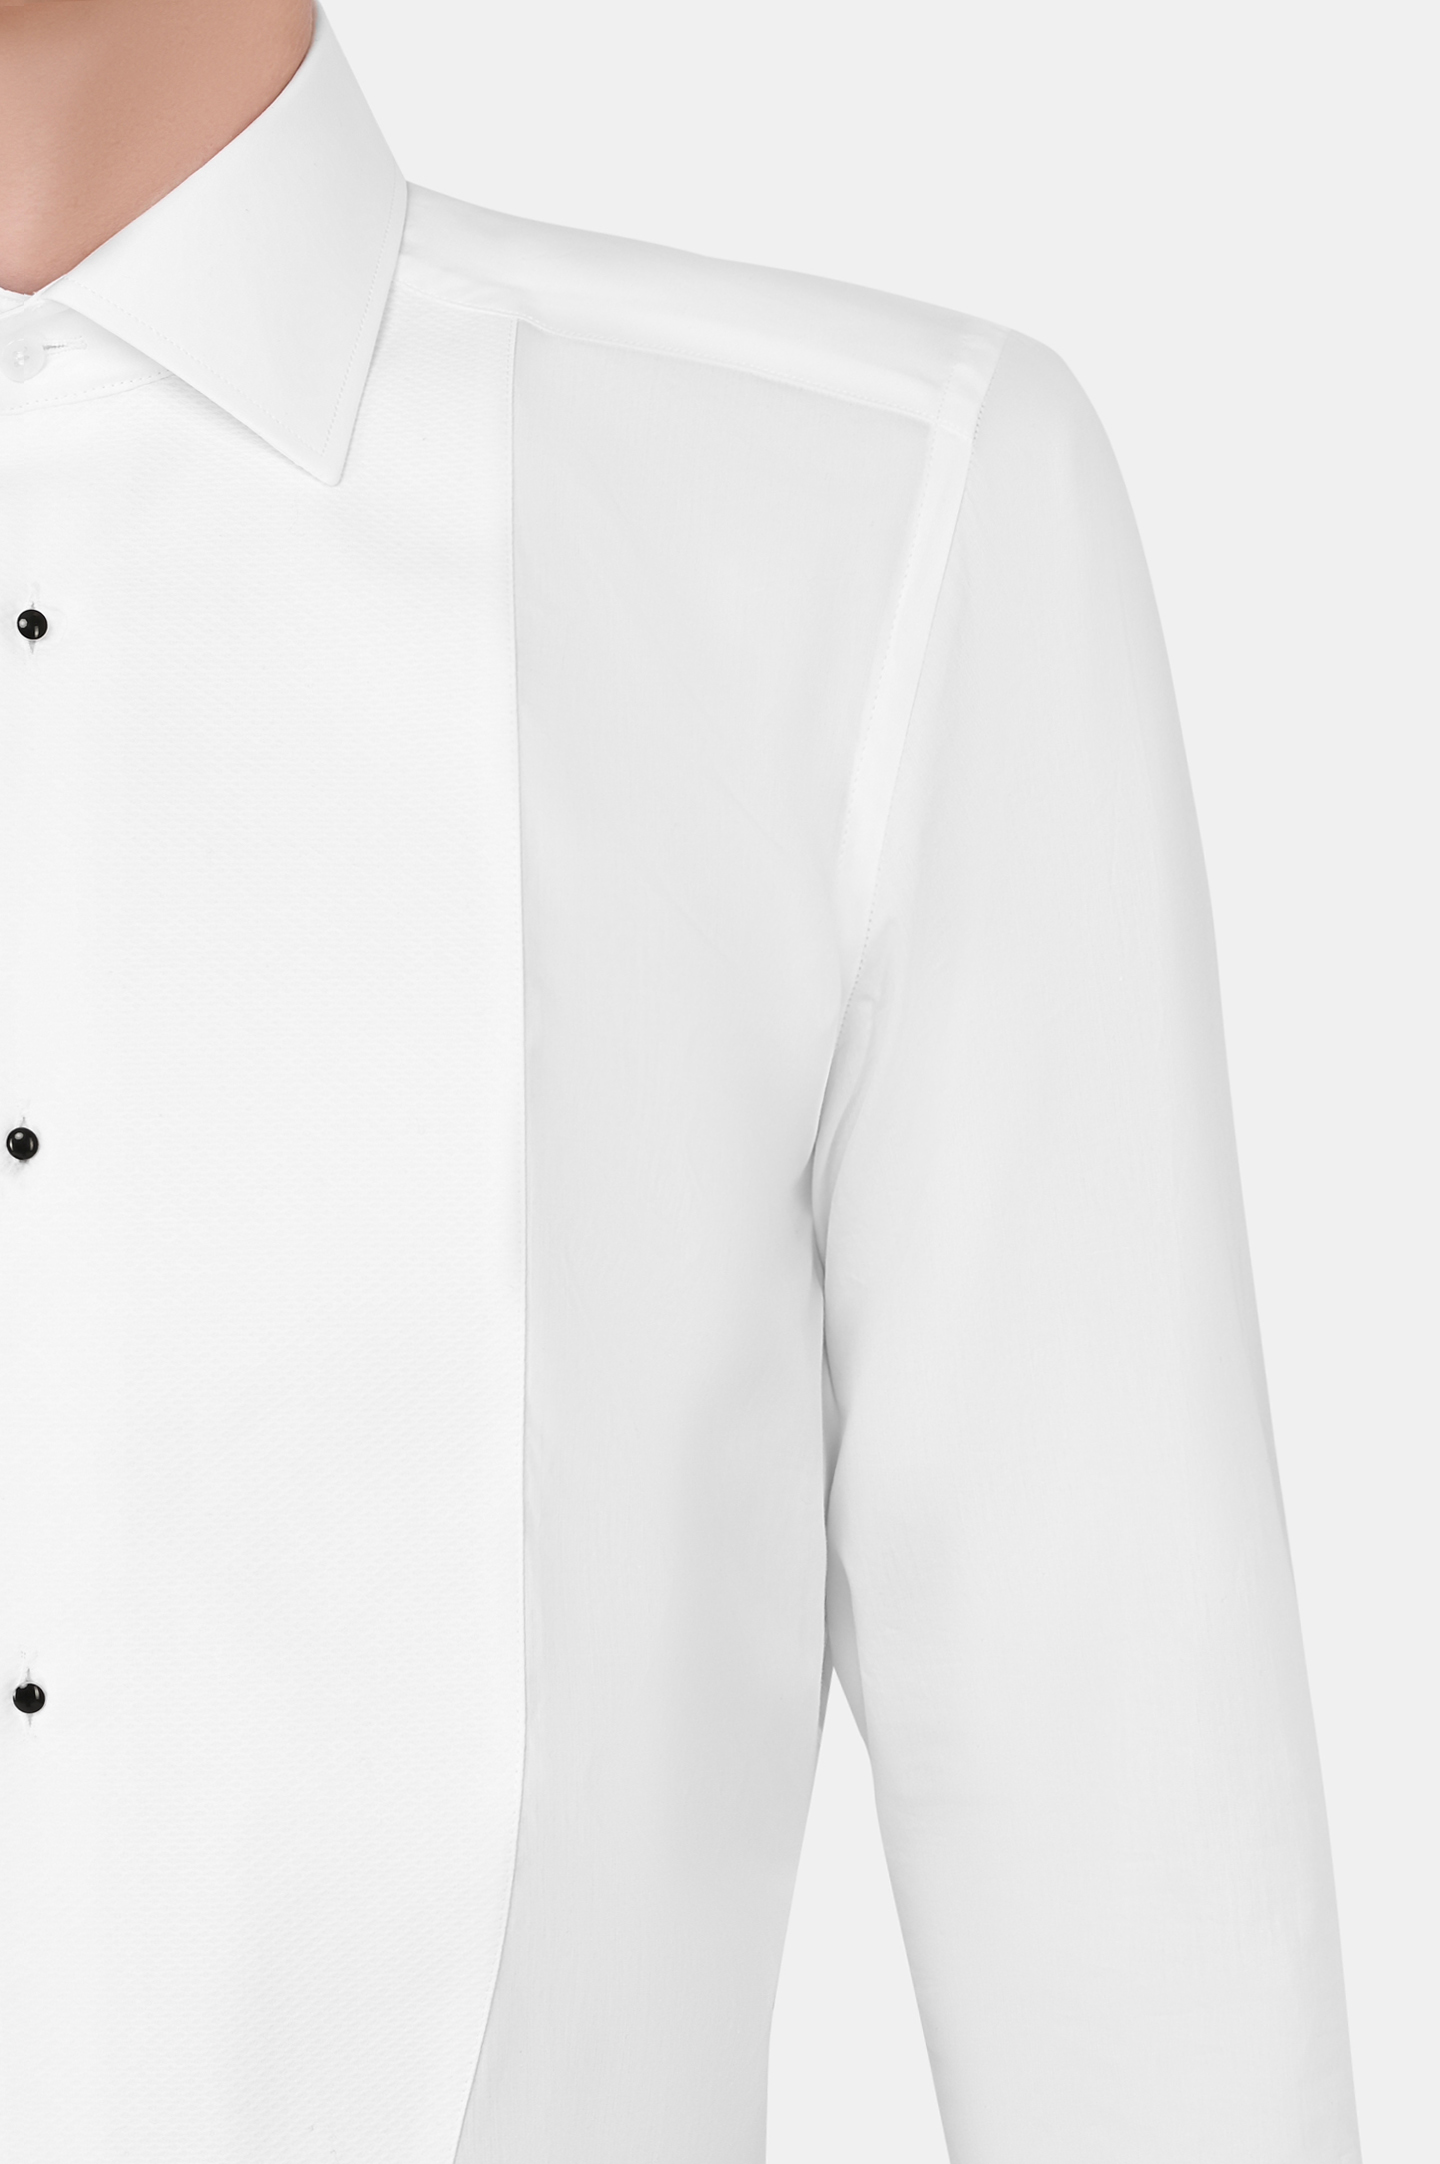 Рубашка DOLCE & GABBANA G5EN5T FU5K9, цвет: Белый, Мужской